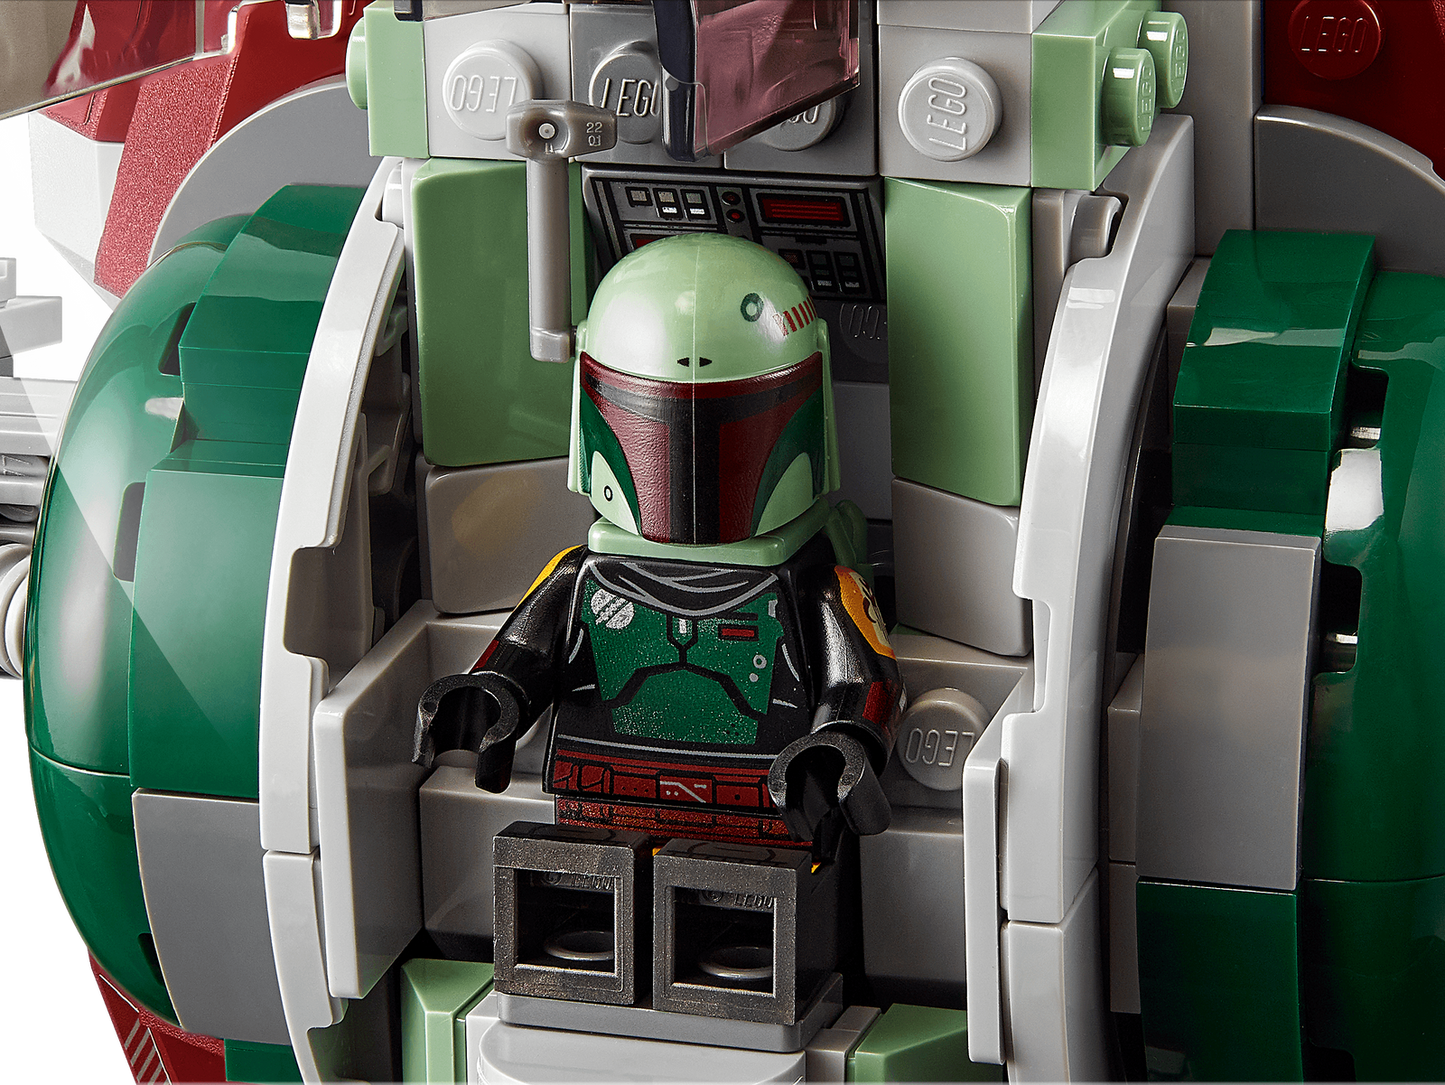 Lego Star Wars Boba Fett's Starship 75312